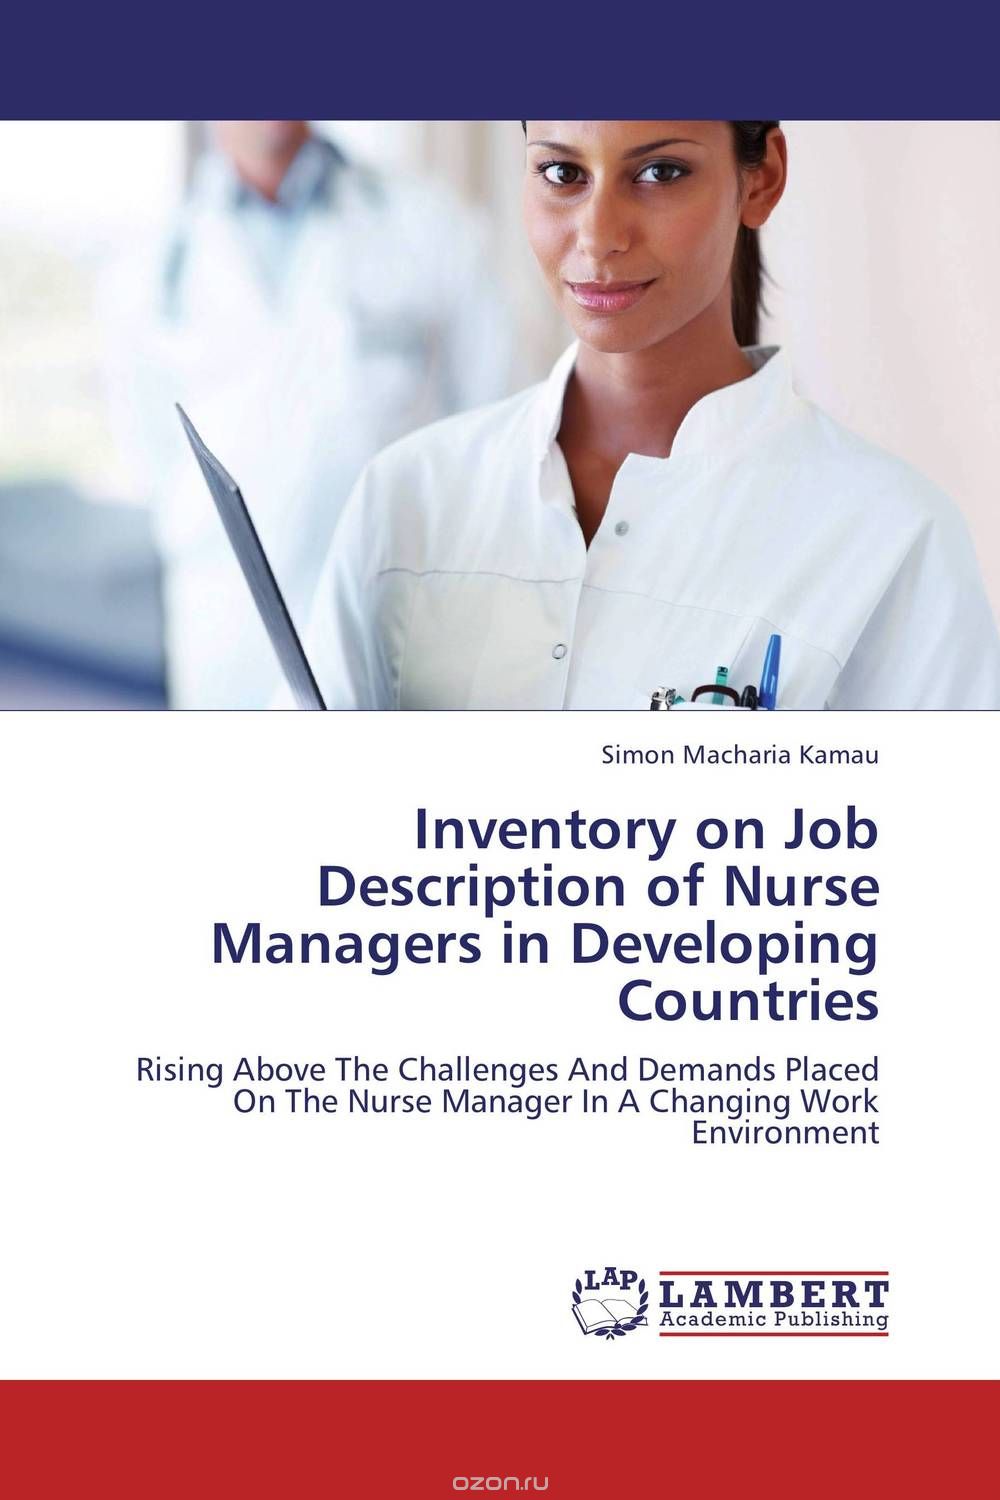 Скачать книгу "Inventory on Job Description of Nurse Managers in Developing Countries"